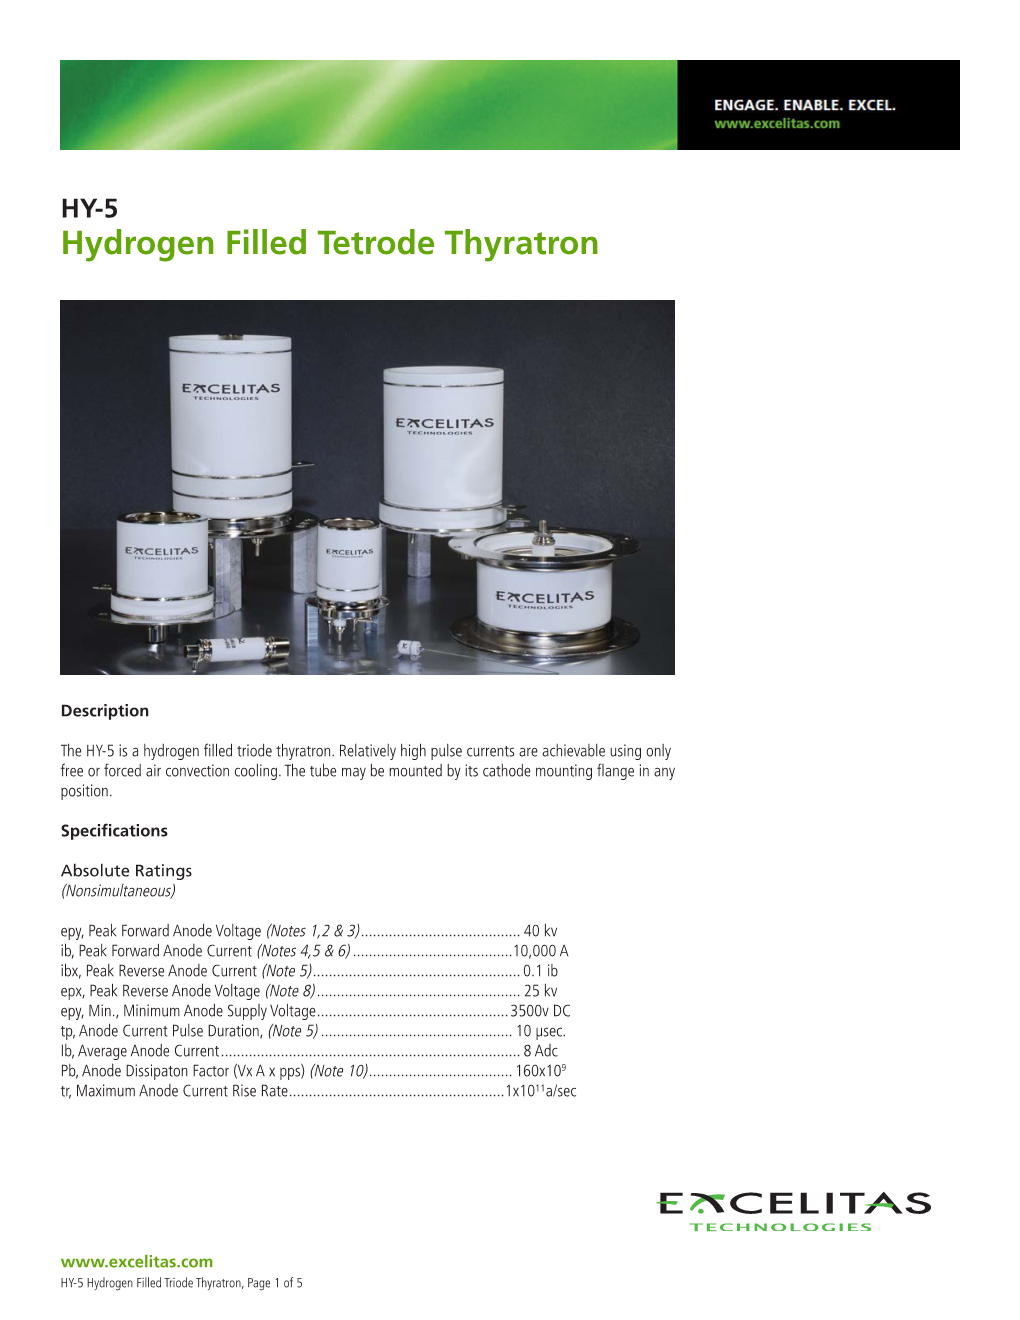 HY-5 Hydrogen Filled Tetrode Thyratron